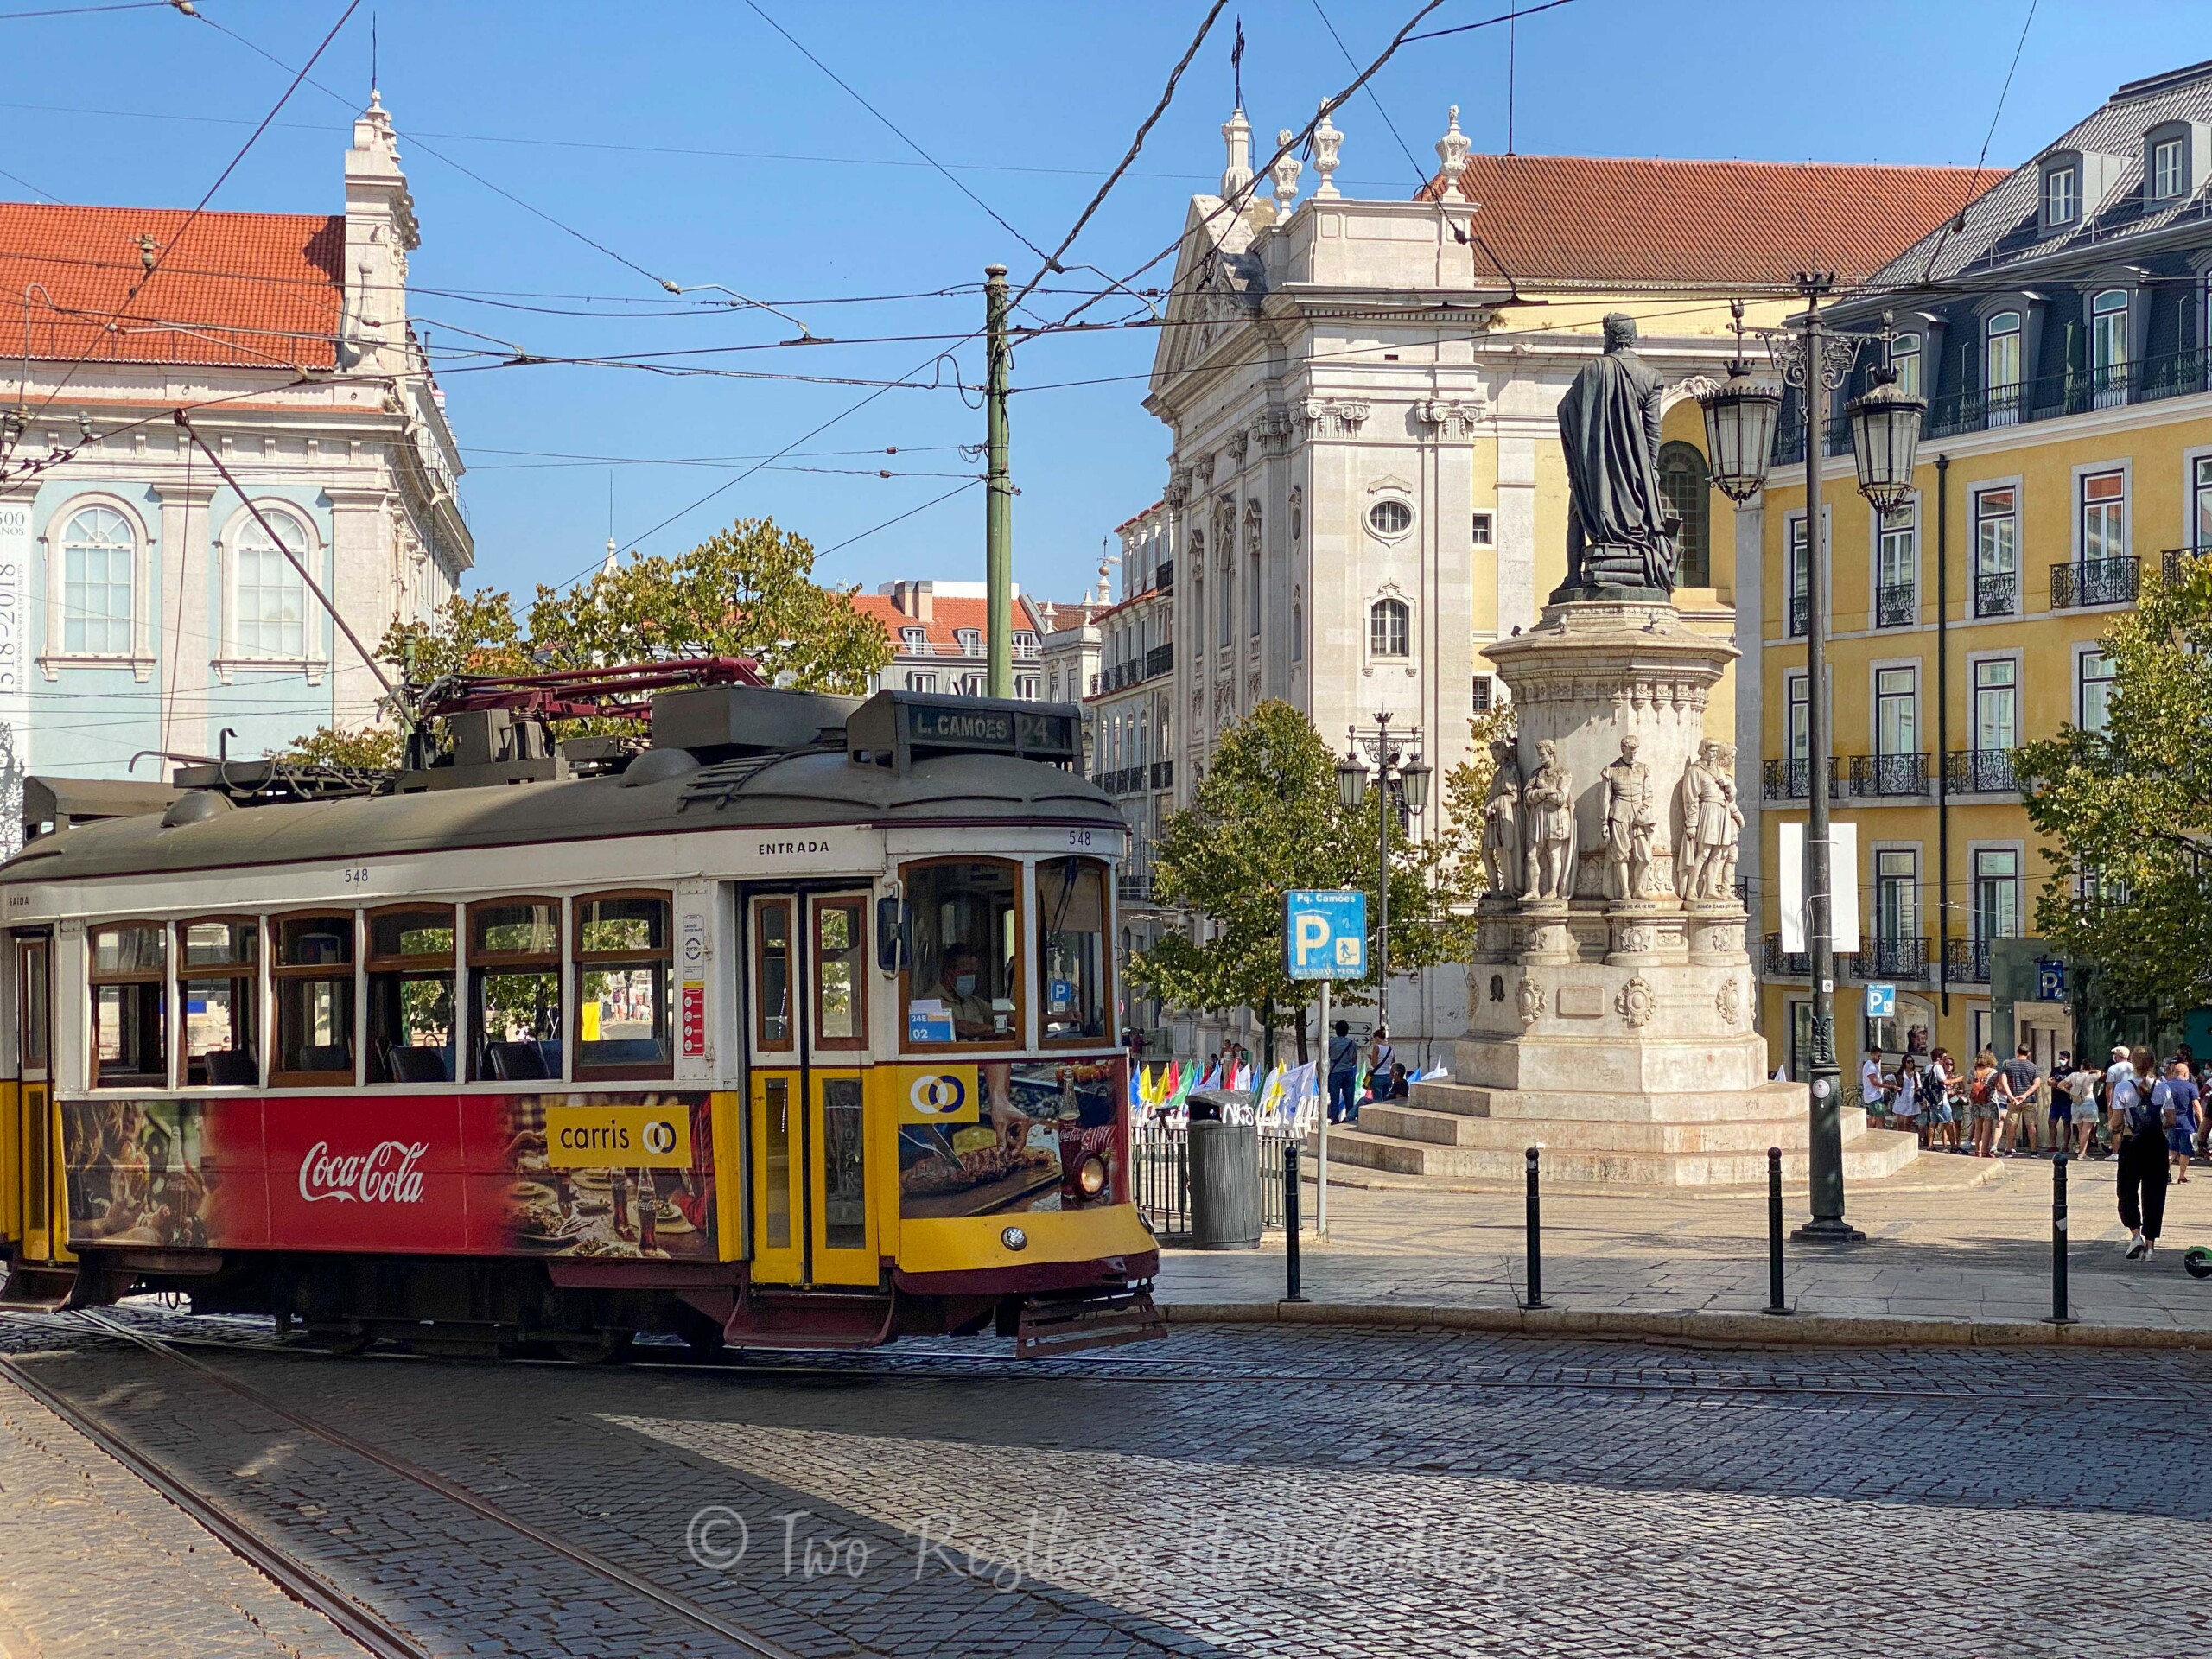 Lisbon - tram at Praca Luis de Camoes - Two Restless Homebodies